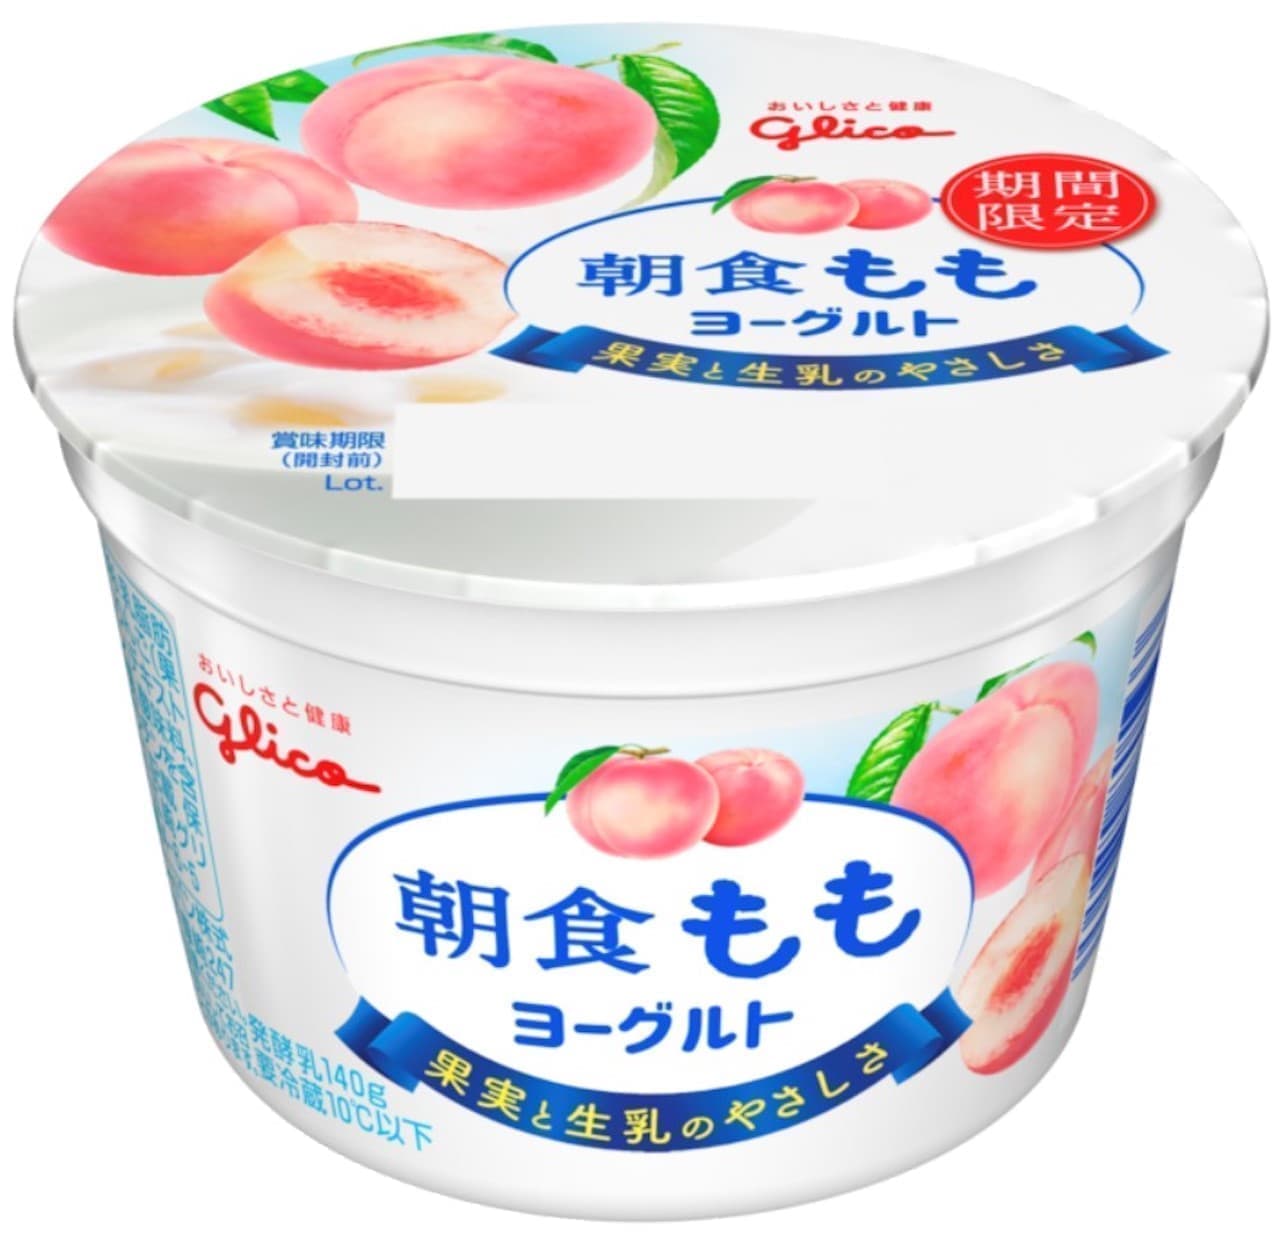 "Breakfast peach yogurt" for a limited time